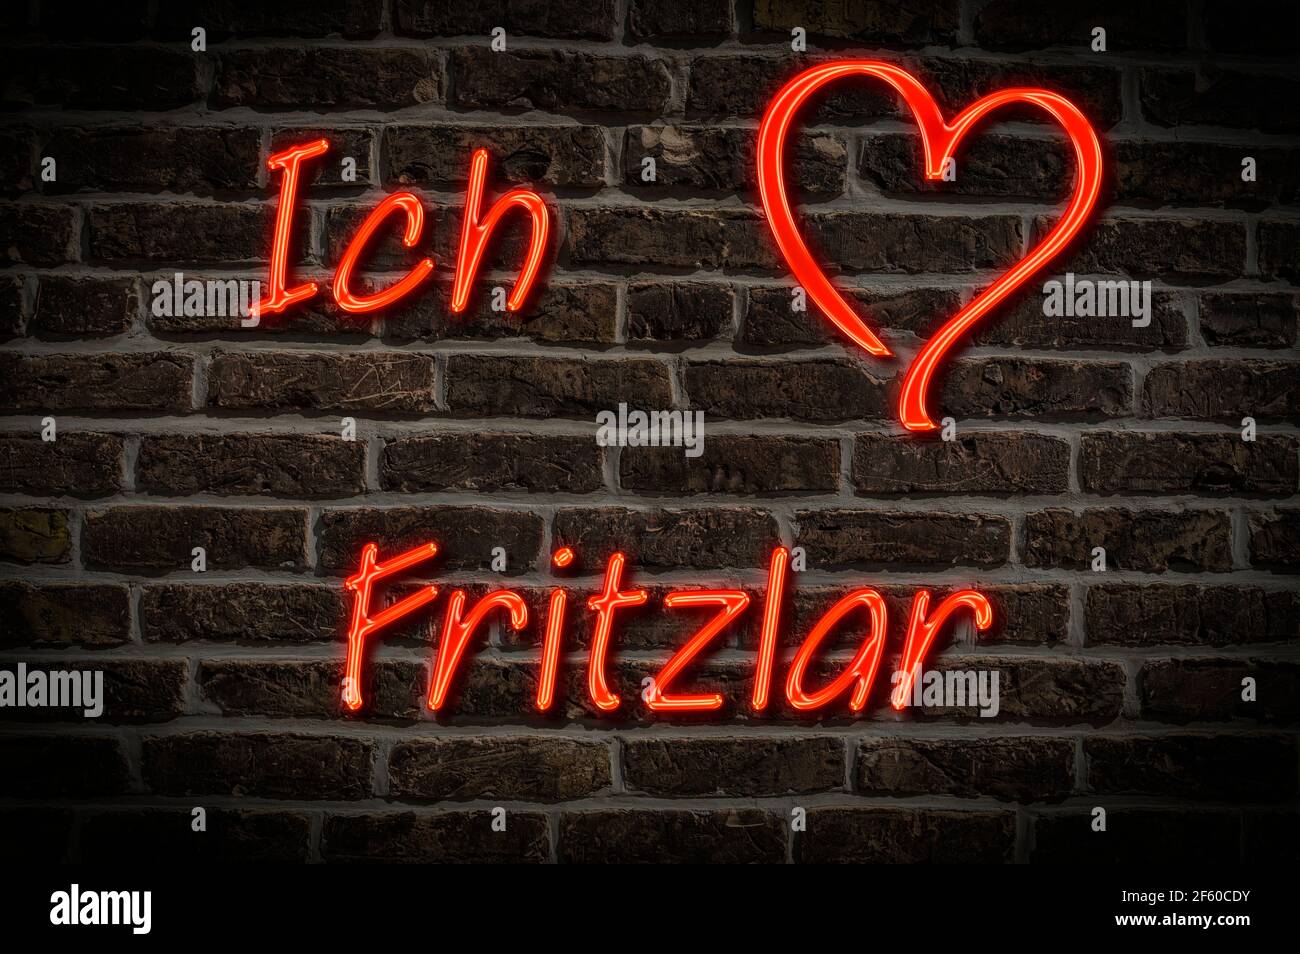 Leuchtreklame, Ich liebe Fritzlar, Hessen, Deutschland, Europa | Illuminated advertising, I love Fritzlar, Hesse, Germany, Europe Stock Photo